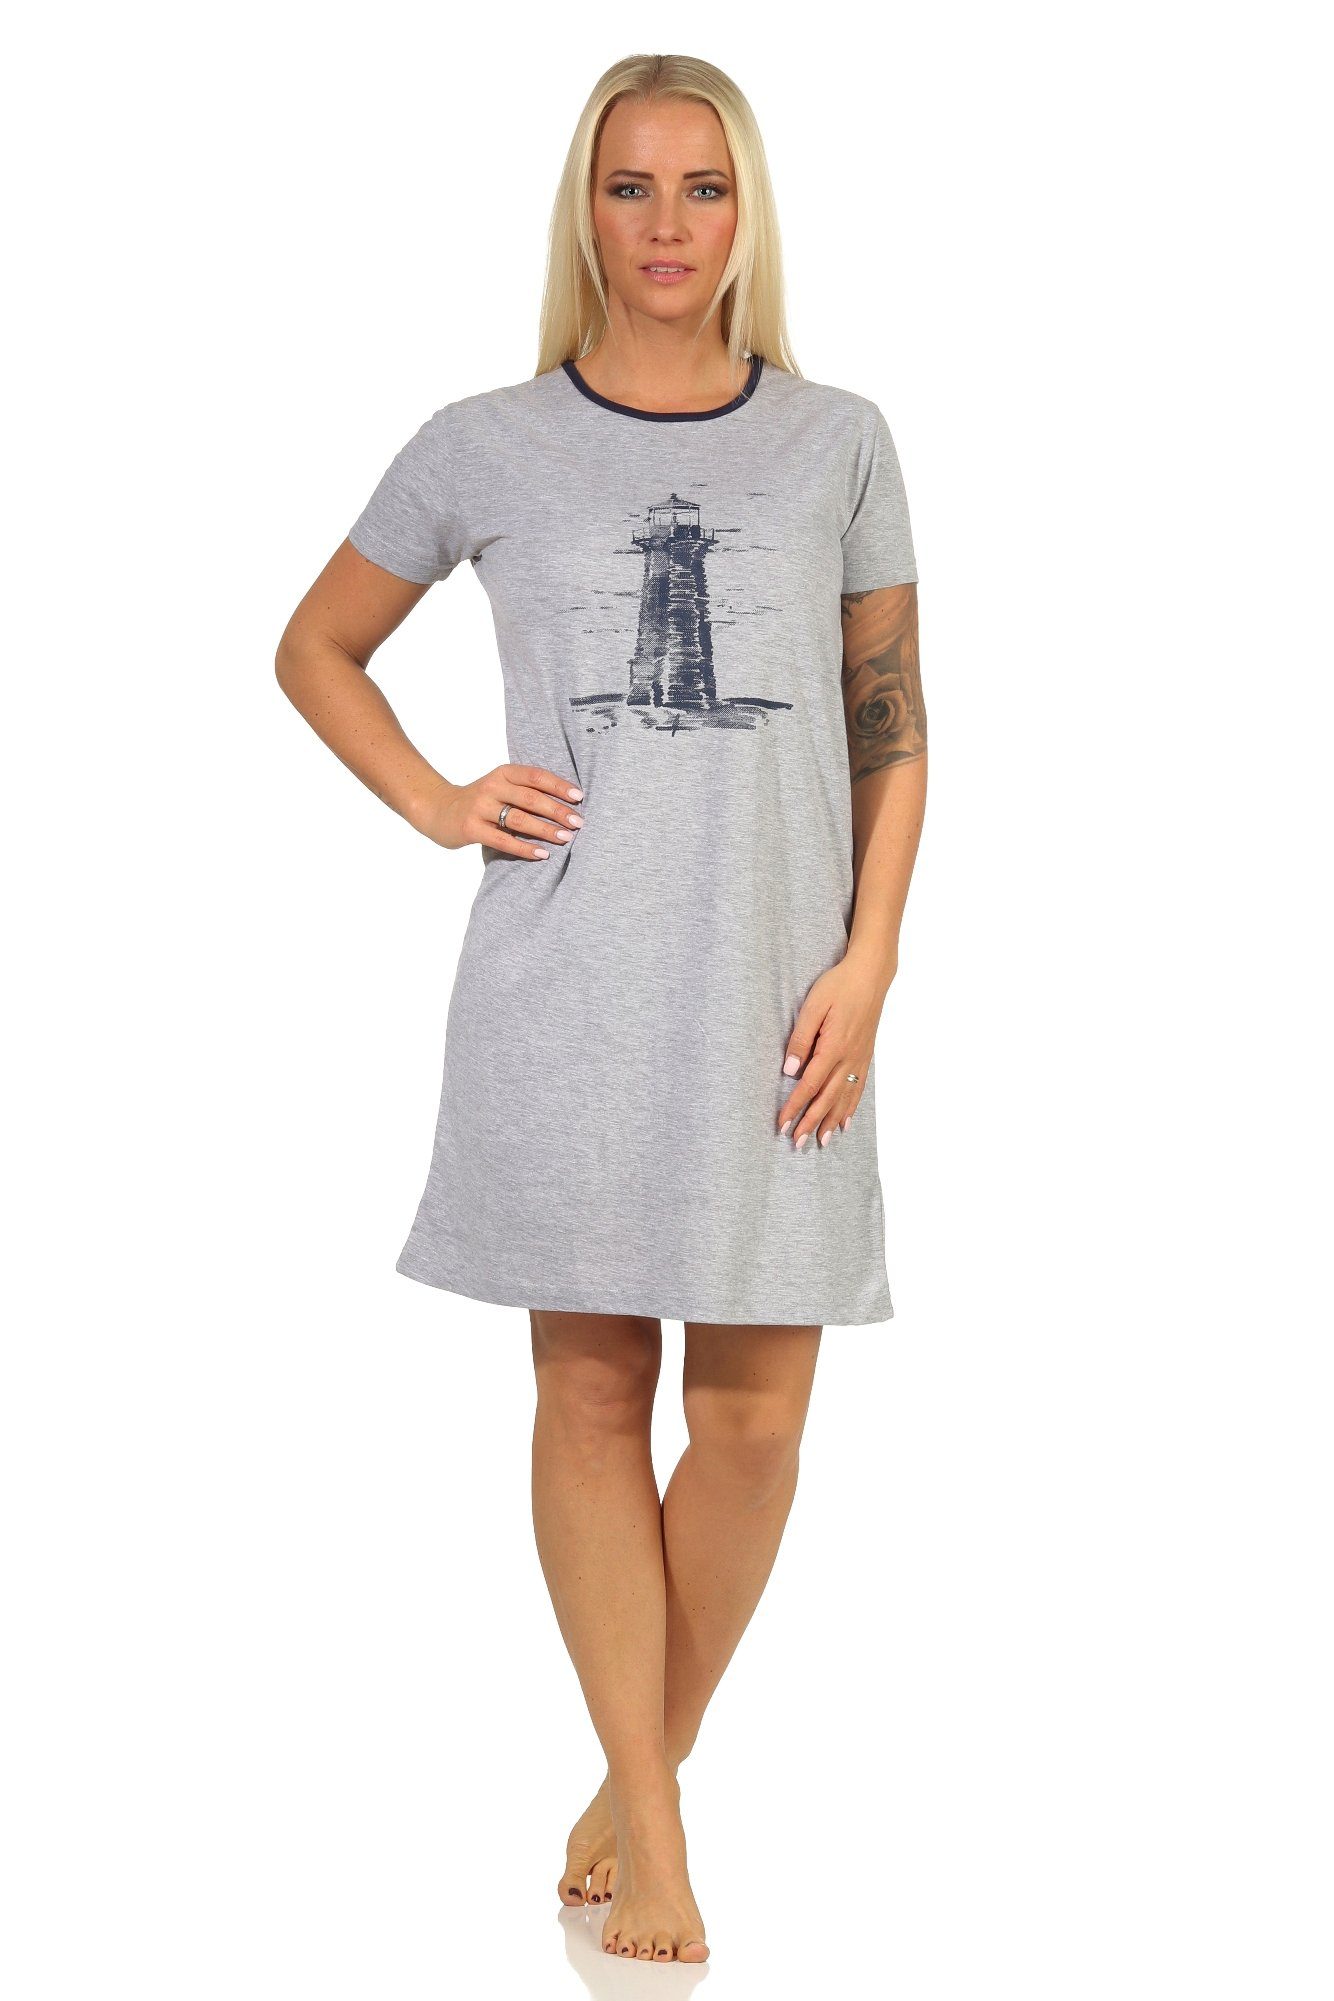 RELAX by als Leuchtturm grau Motiv und im Nachthemd Damen Look Nachthemd kurzarm Normann maritimen